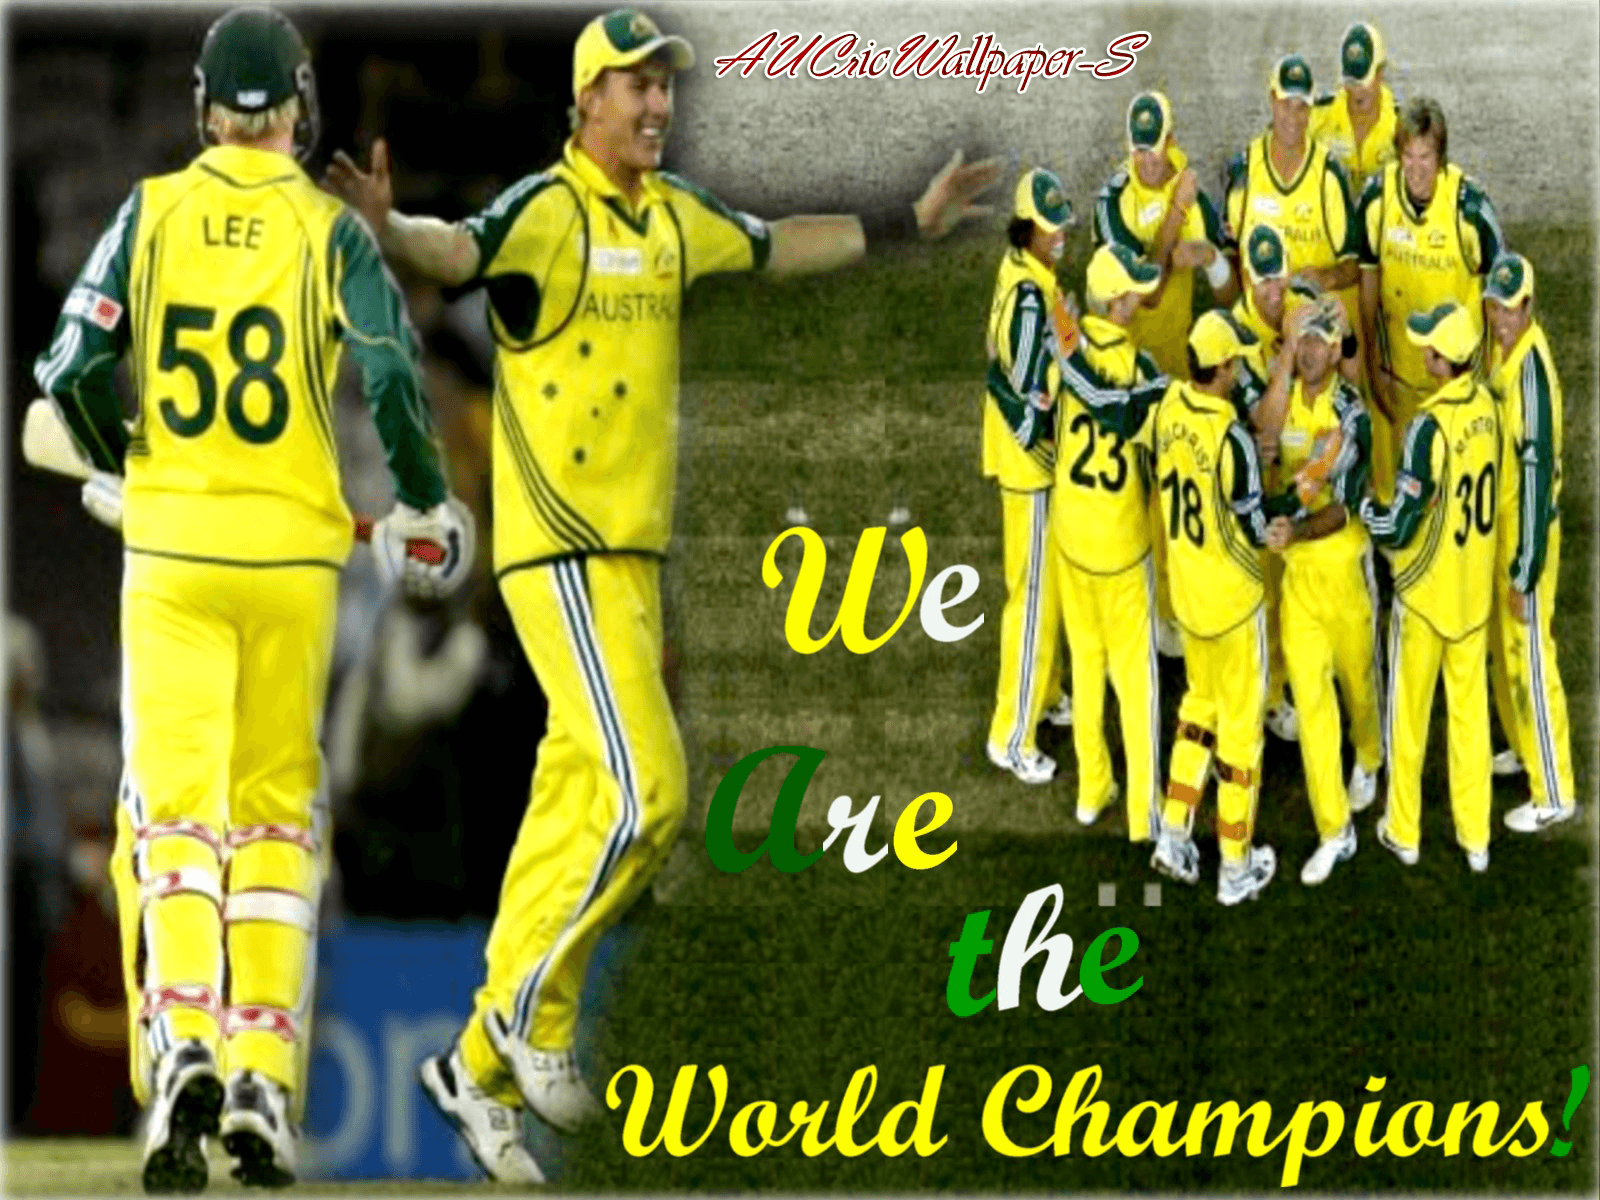 all sports wallpaper. icc world cup t20 2012, Australia cricket